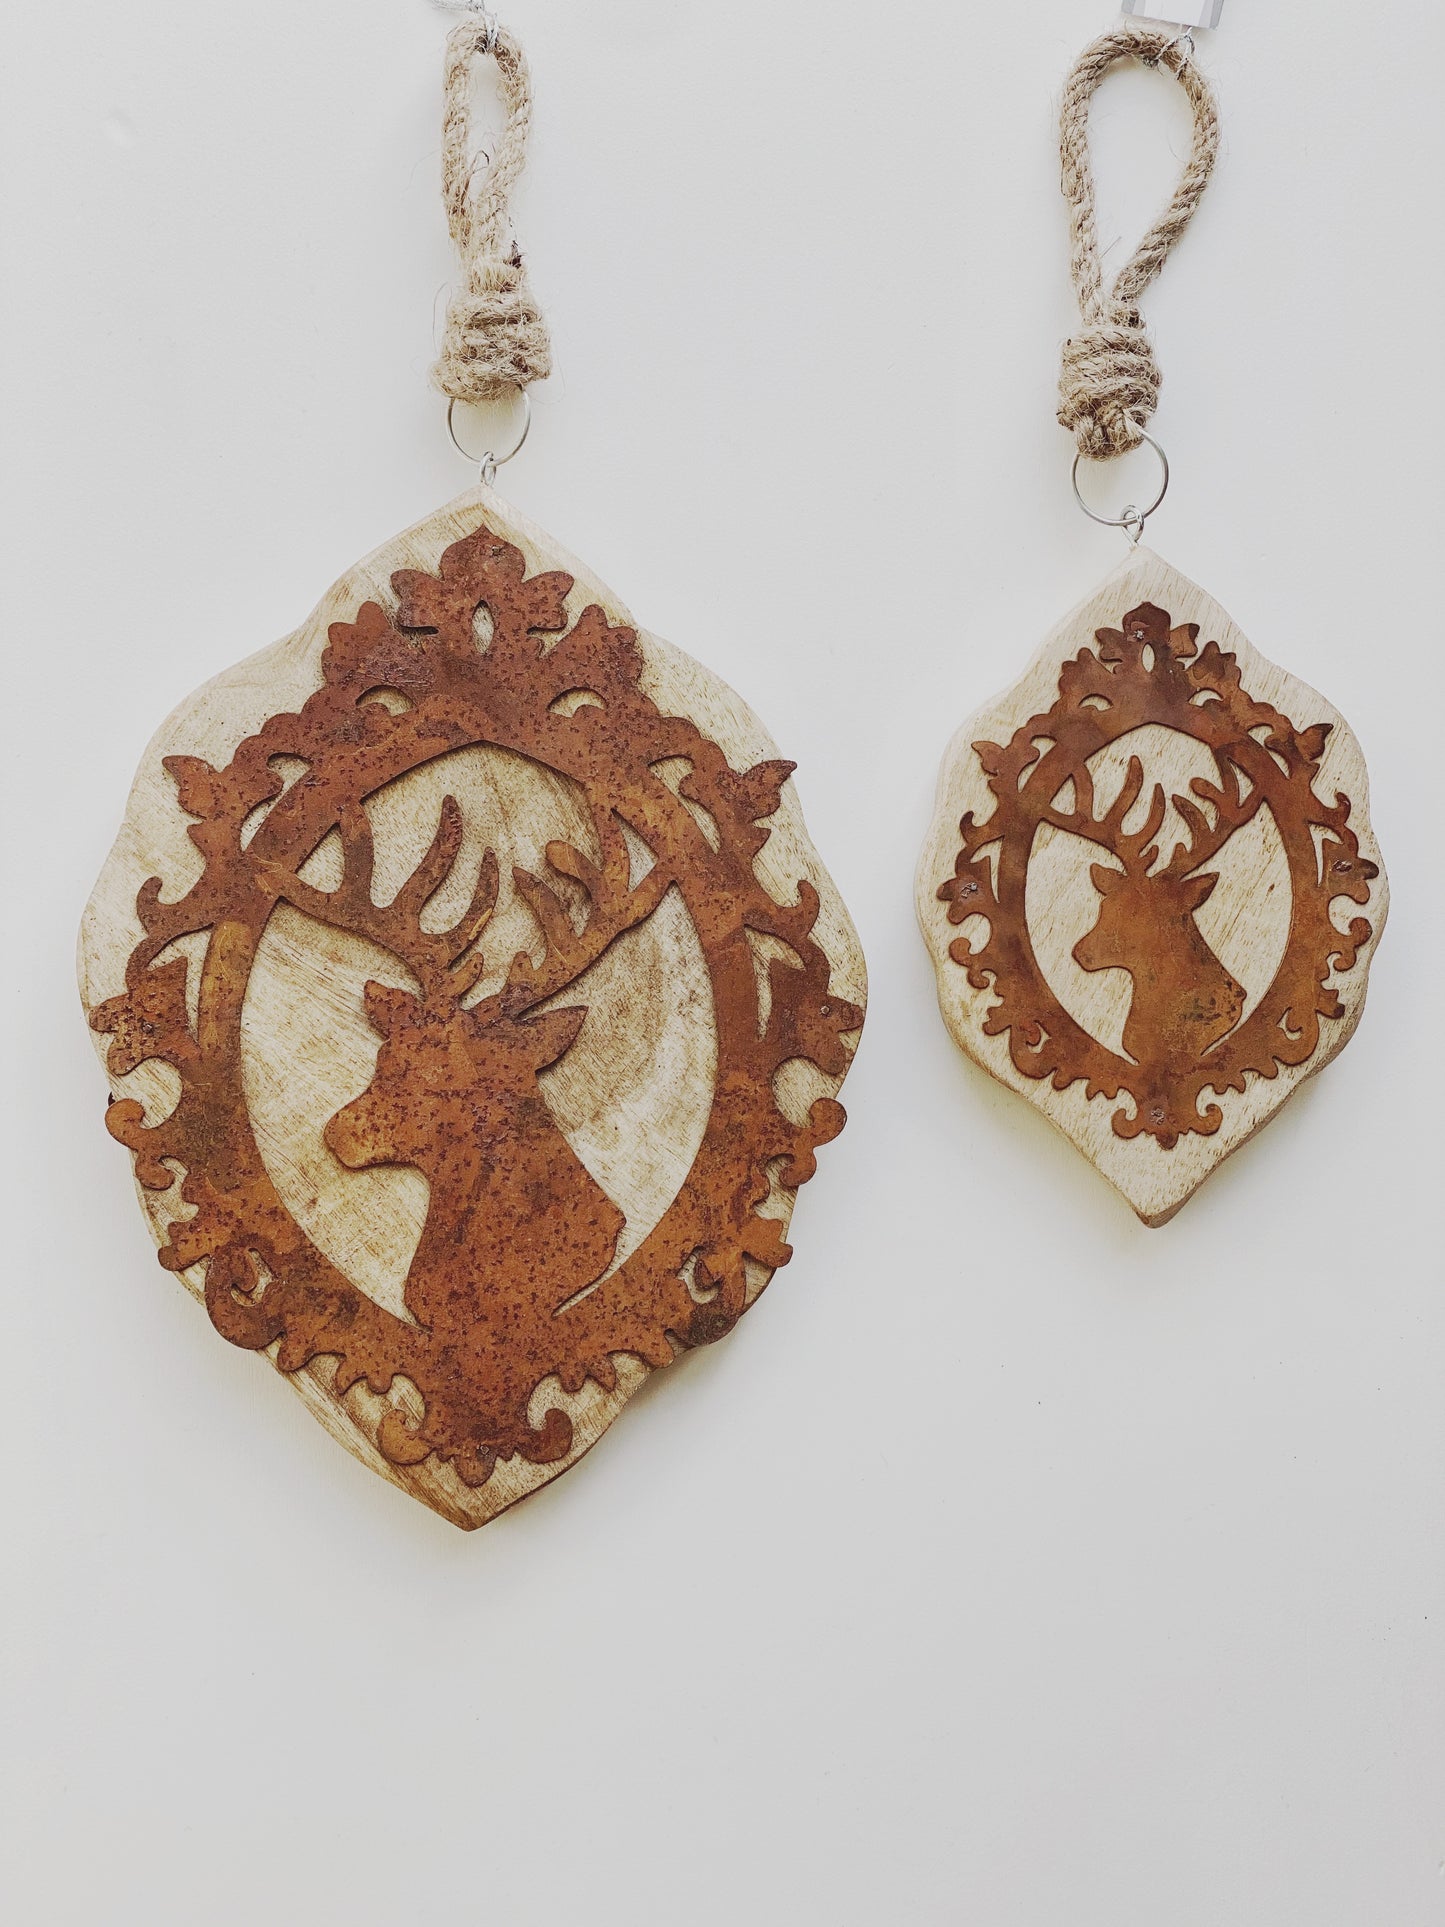 Stag deer wood and metal Ornament